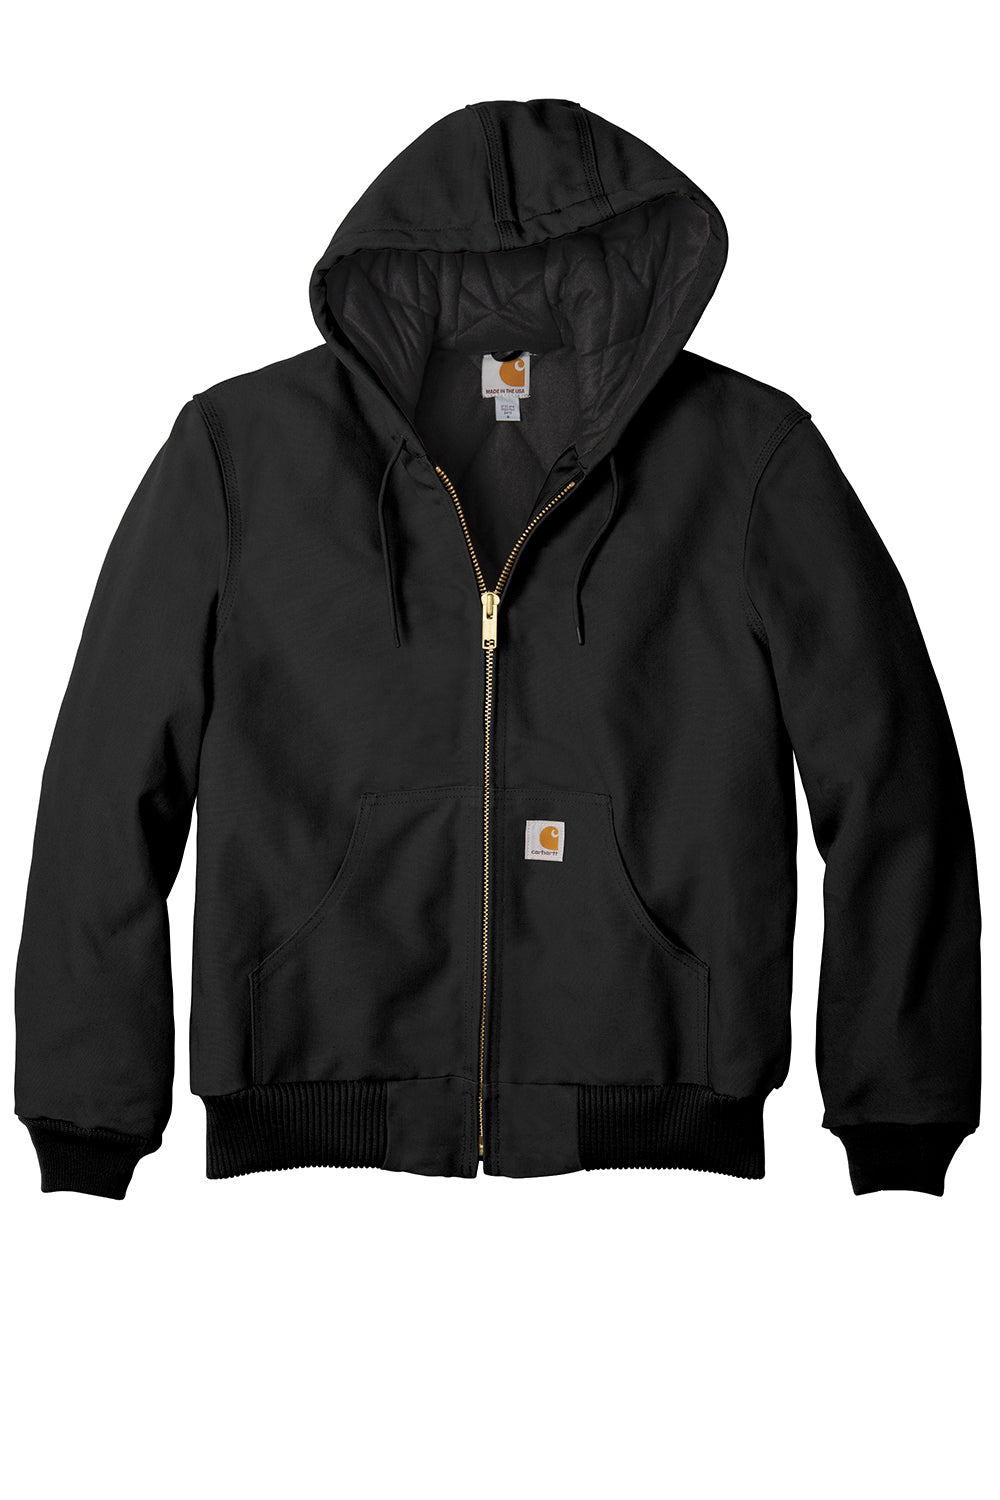 Carhartt CTSJ140/CTTSJ140 Mens Wind & Water Resistant Duck Cloth Full Zip Hooded Work Jacket Black Flat Front